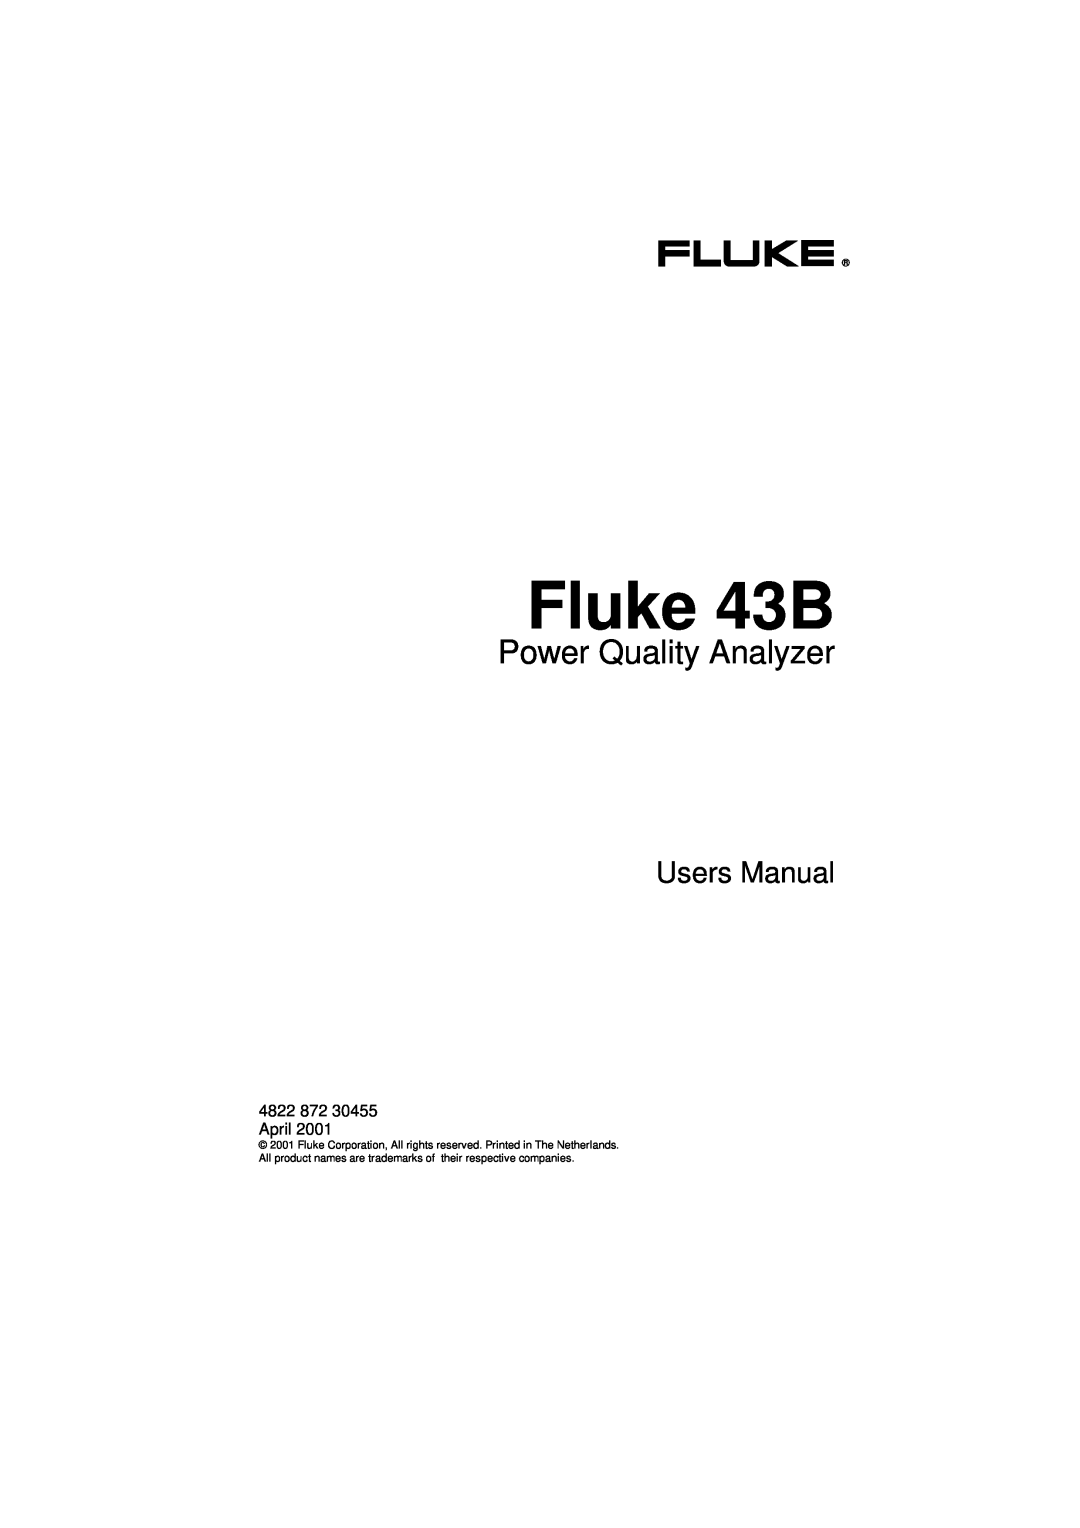 Fluke user manual Fluke 43B, Power Quality Analyzer 